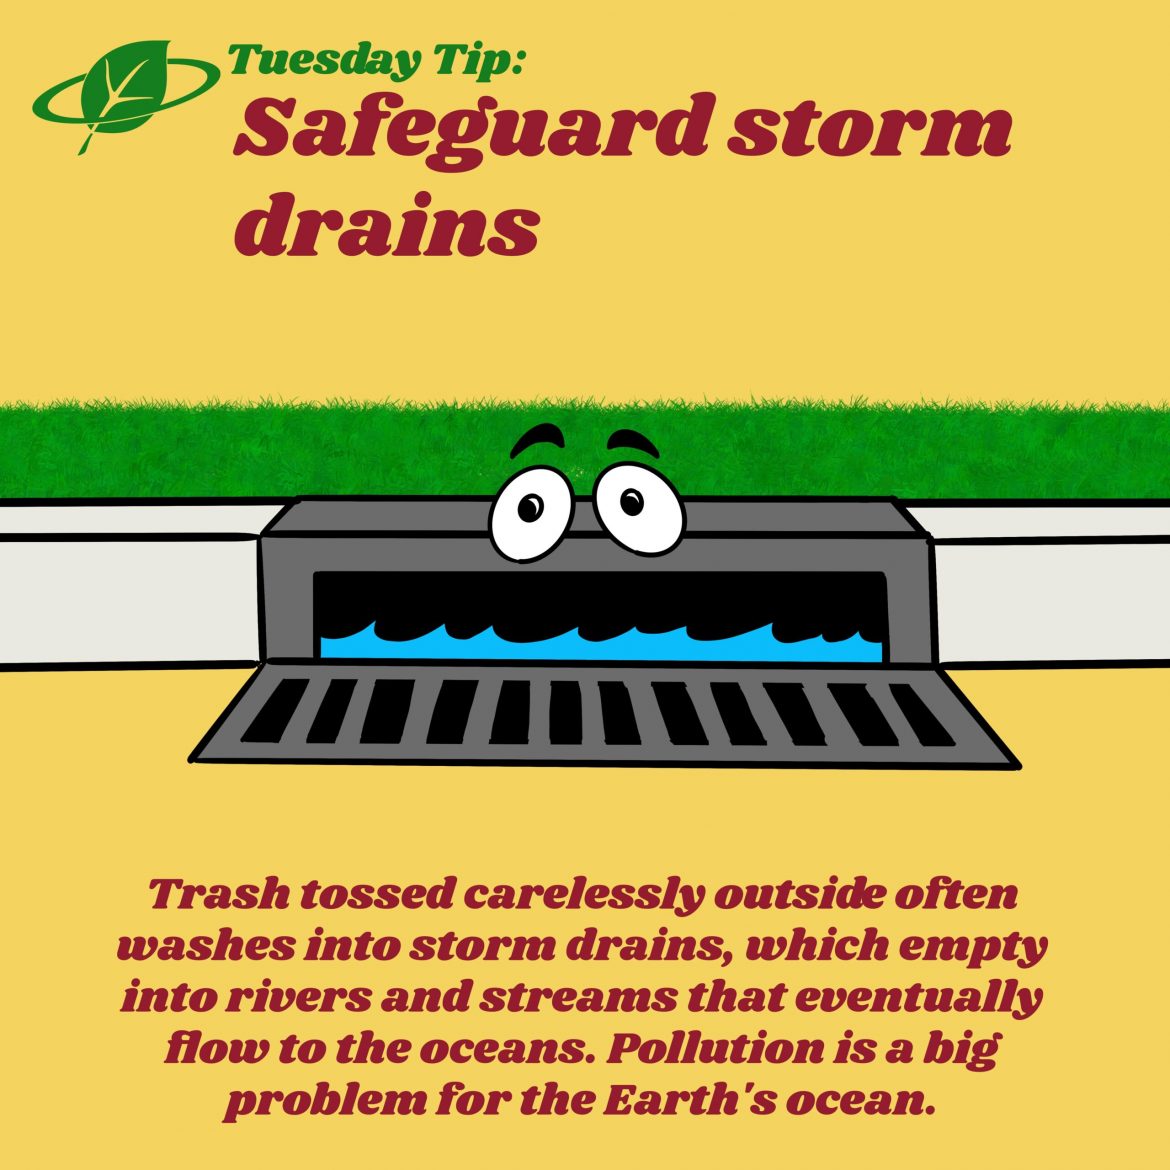 Safeguard storm drains | Tuesday Tip